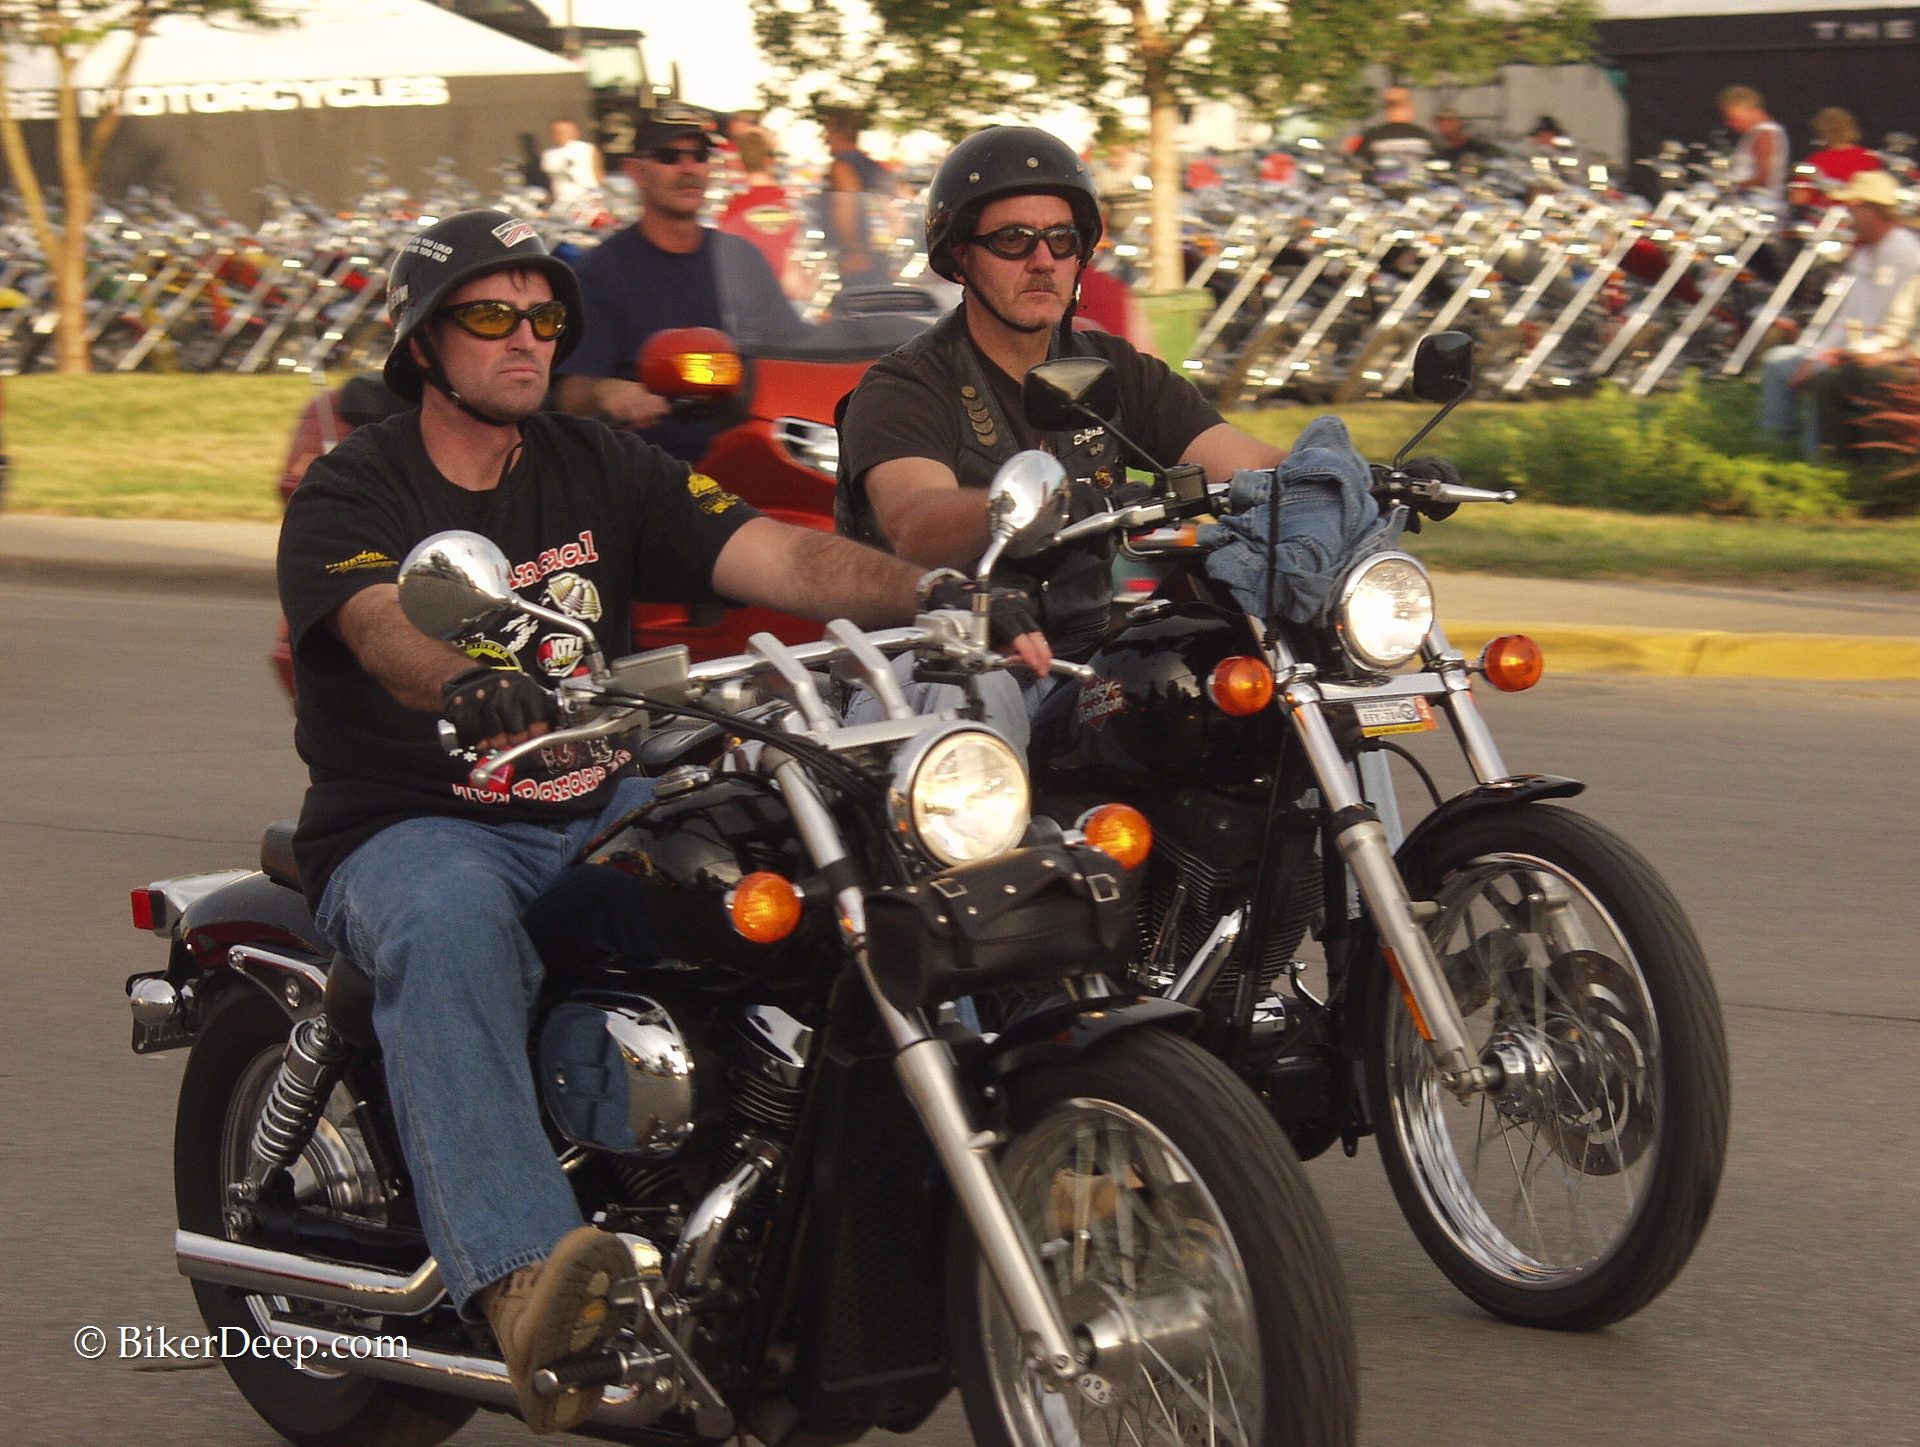 Two biker dudes